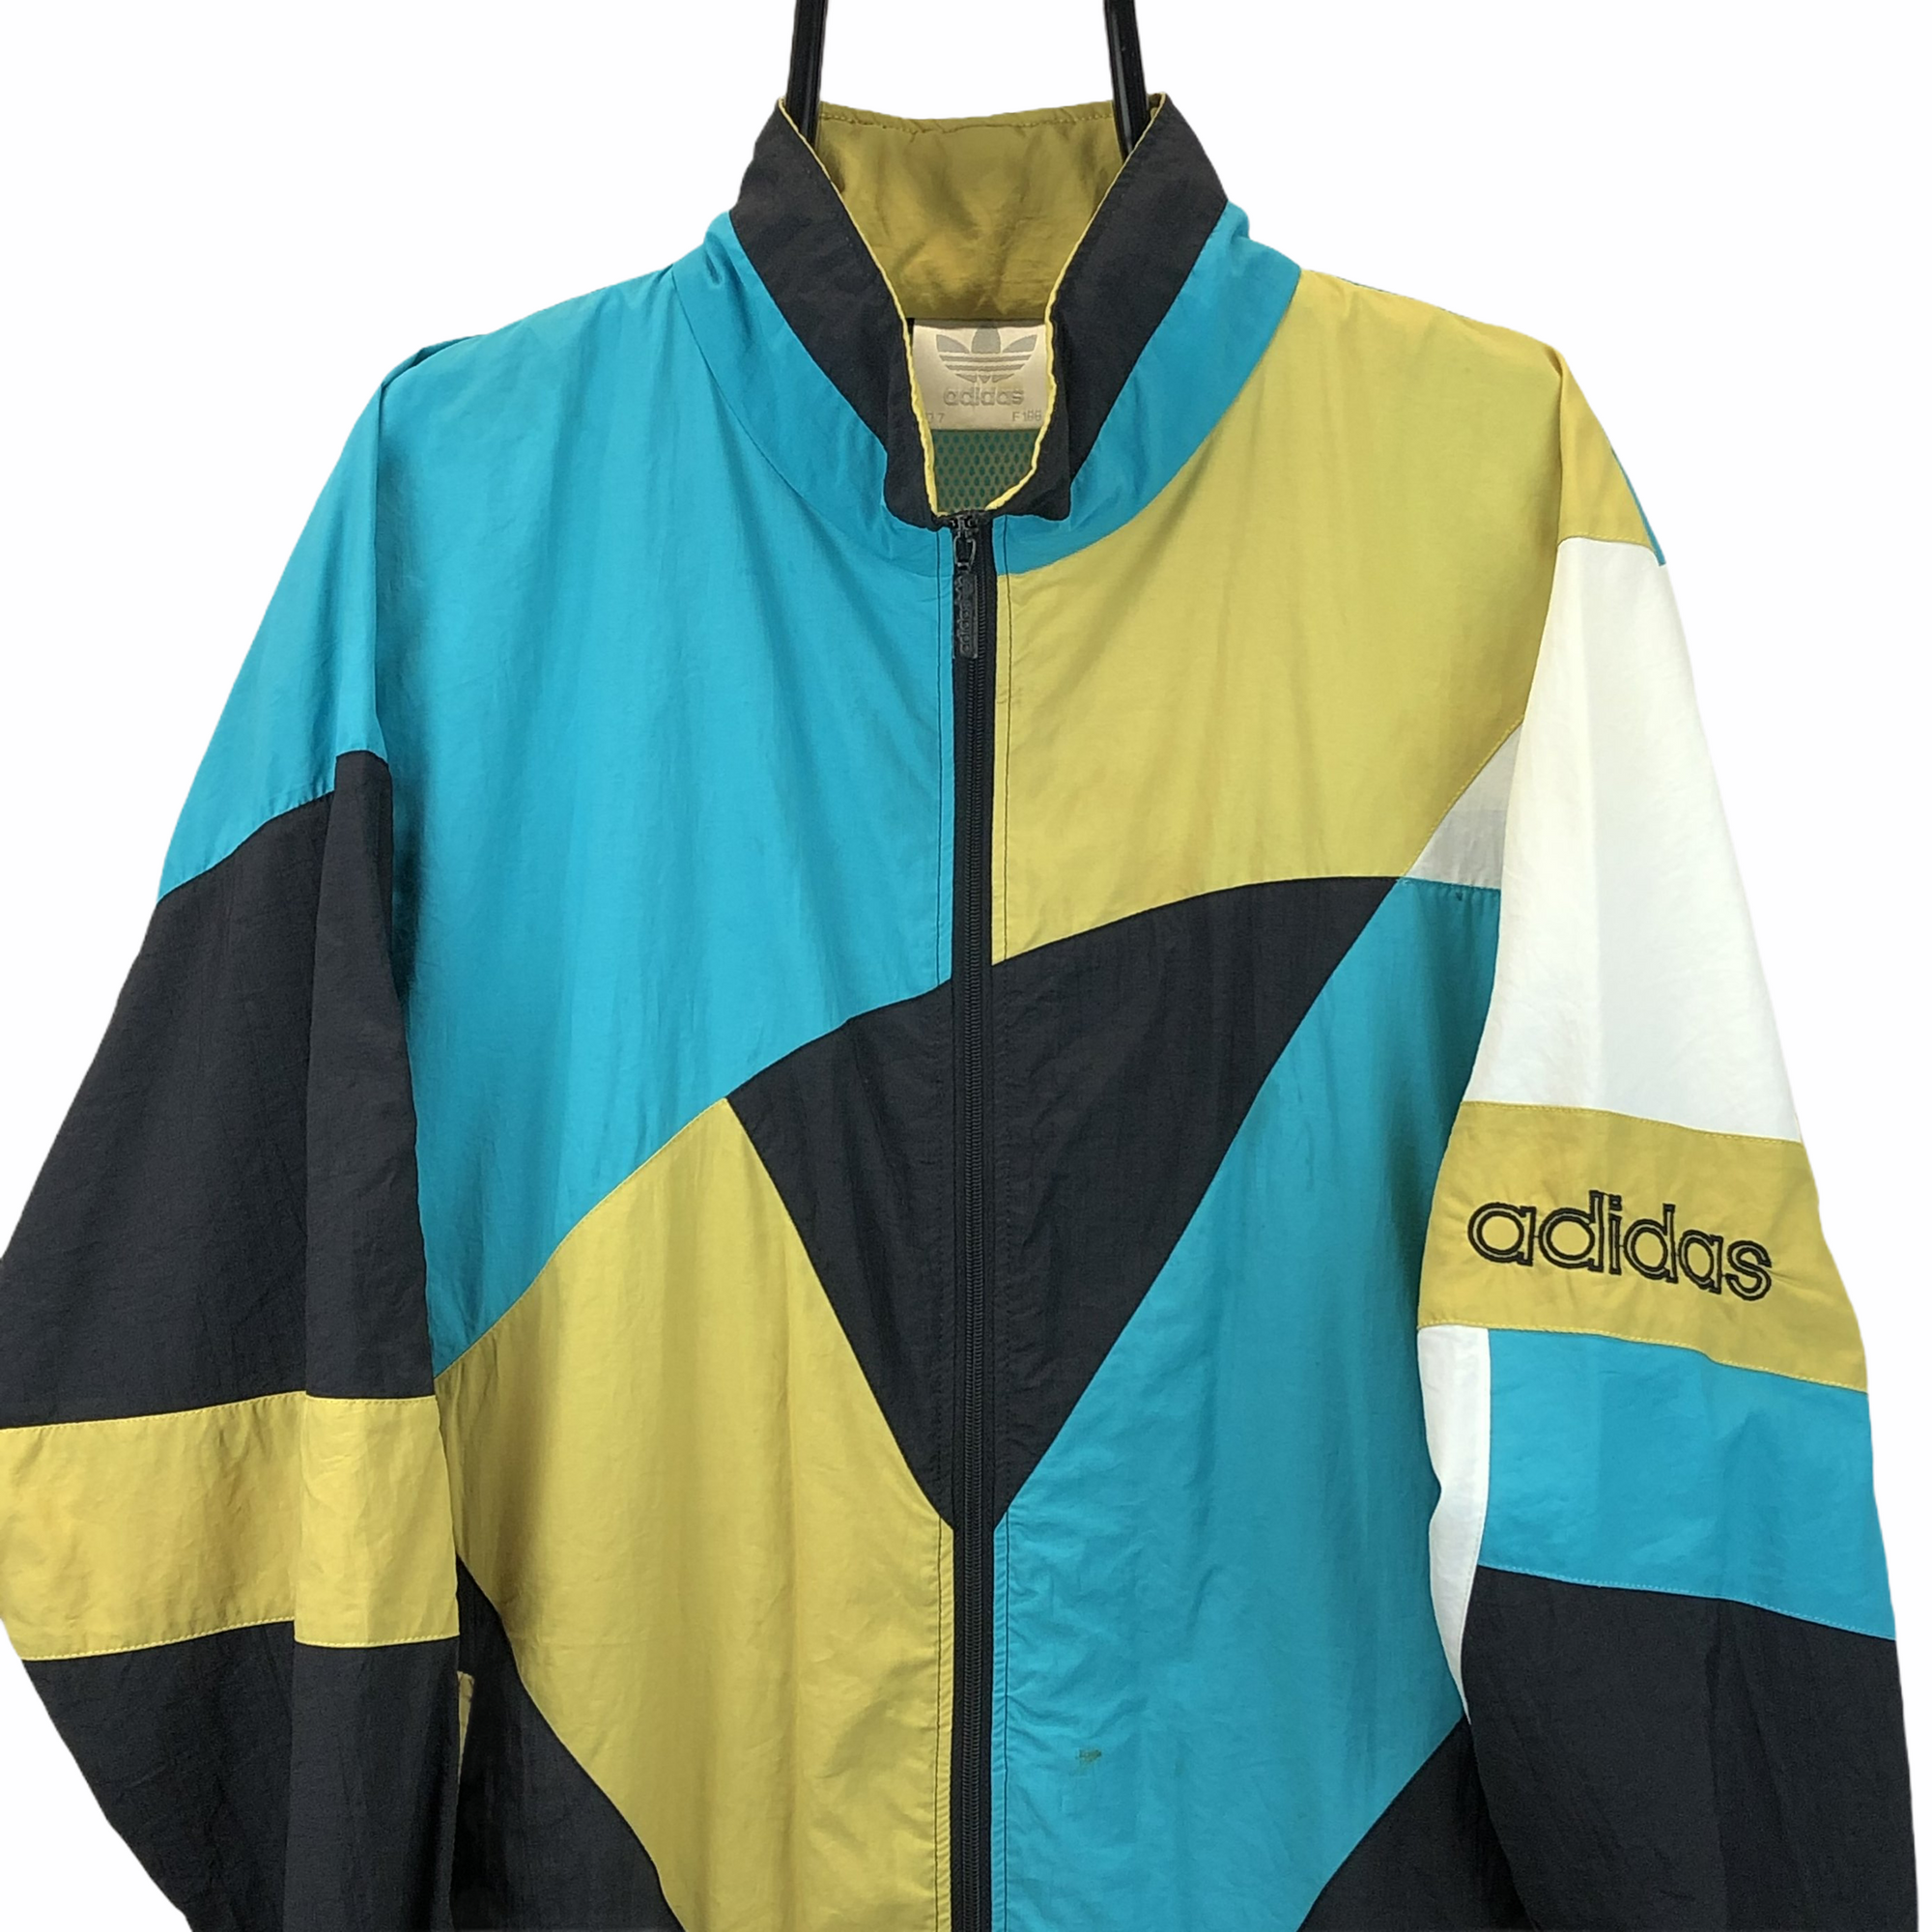 Vintage 90s Adidas Geometric Track Jacket - Men's Large/Women's XL